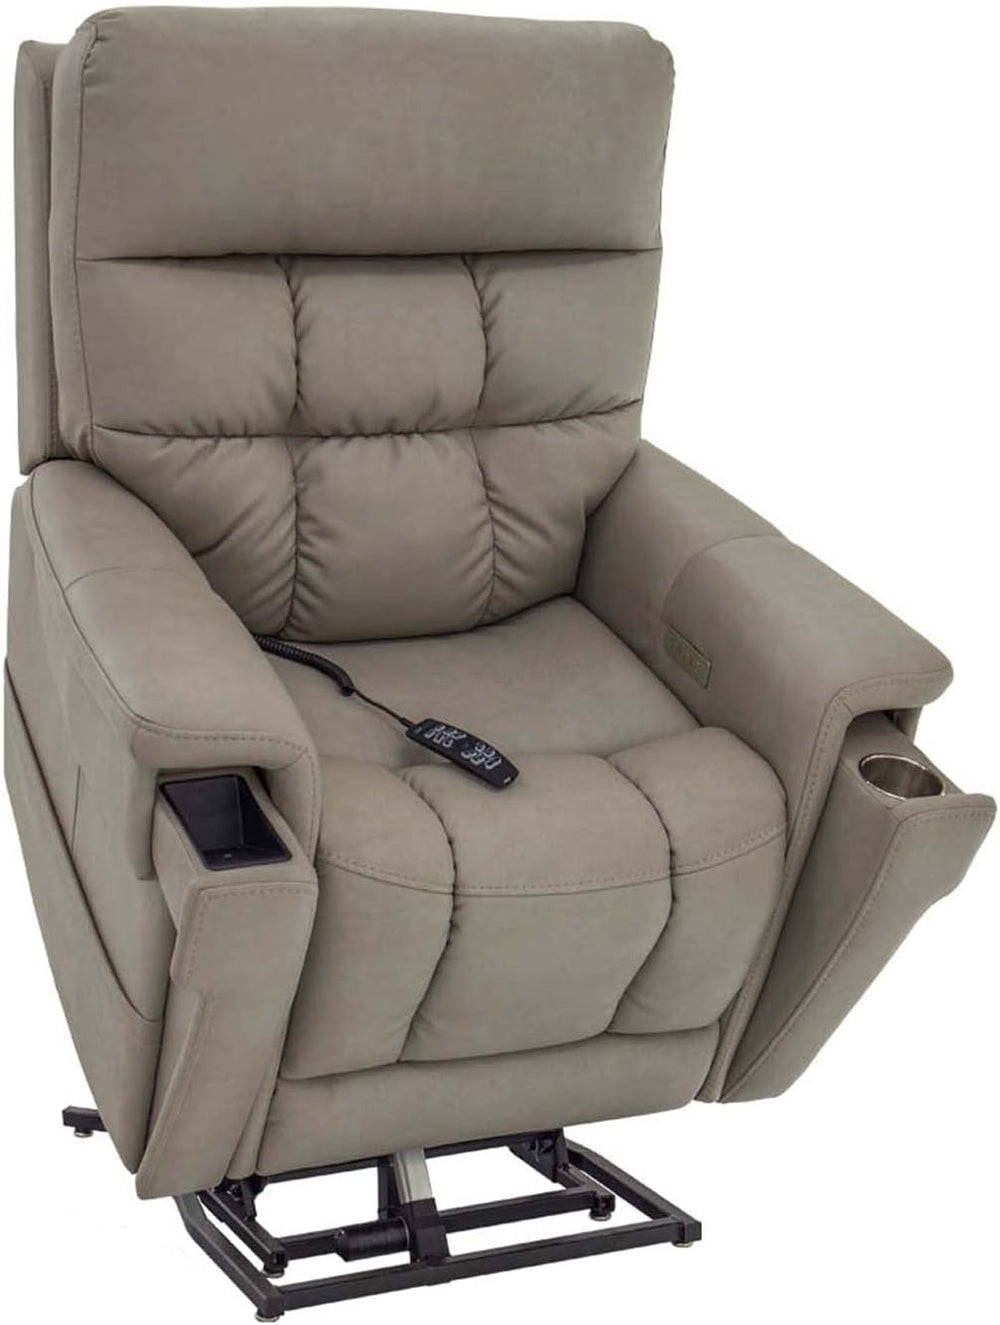 Pride Mobility VivaLift Ultra PLR4955M Electric Power Lift Recliner Chair | Capriccio Fabrics Power Assist Lift Sofa for Elderly, 4-Position, USB Remote, Medium